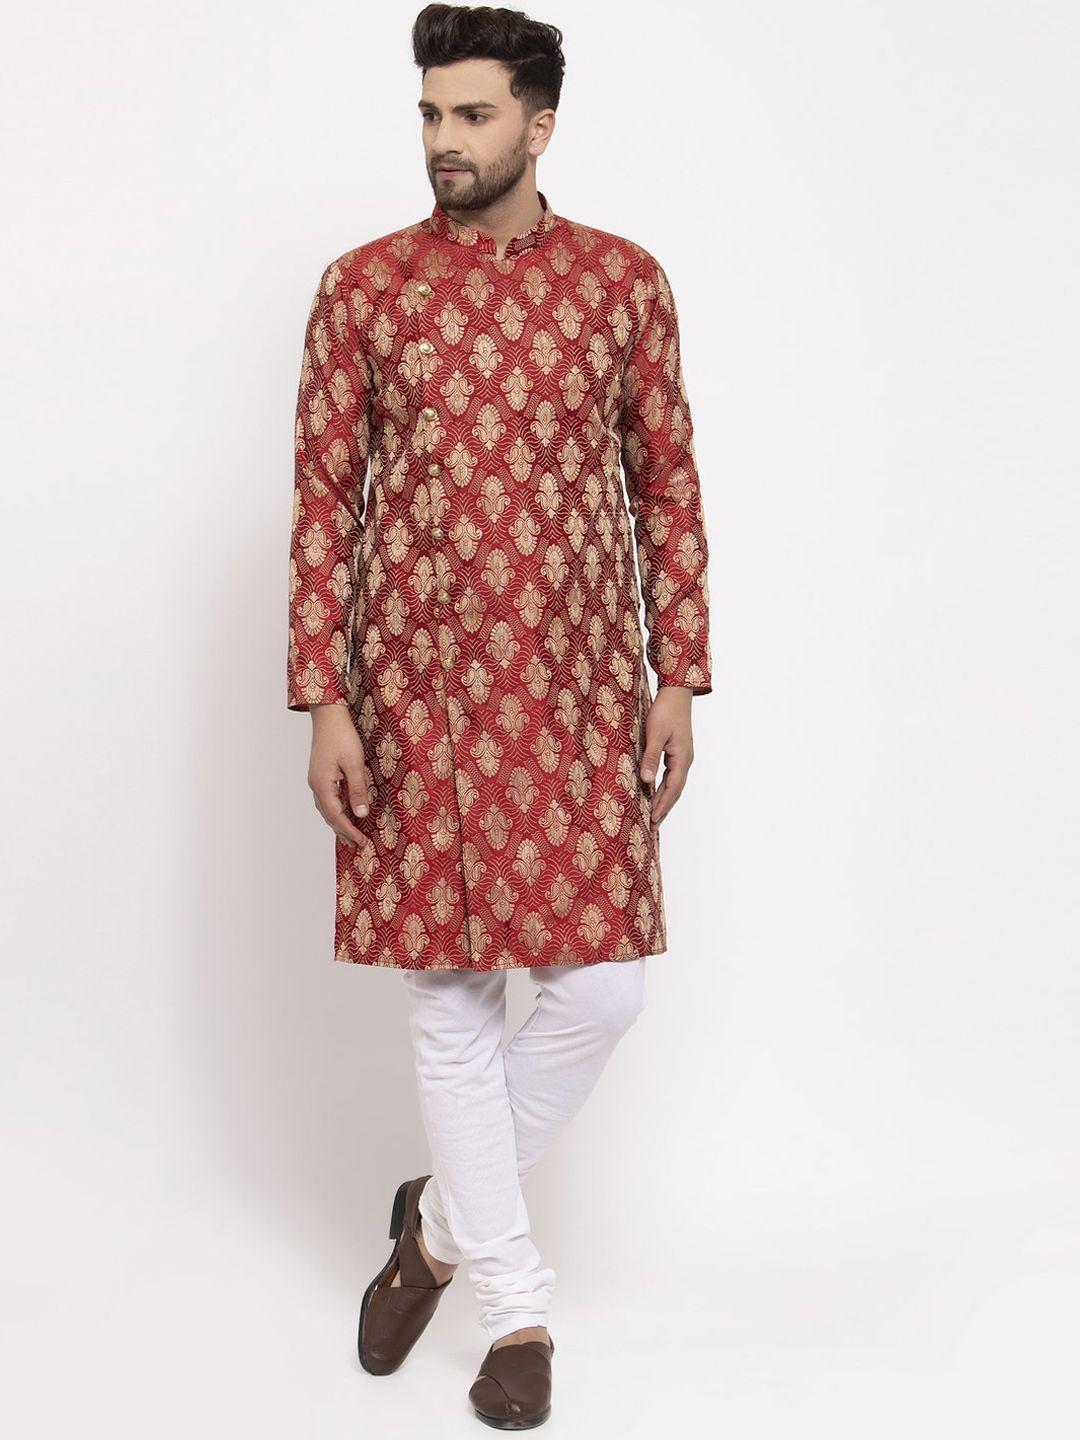 jompers men maroon & white printed kurta with churidar